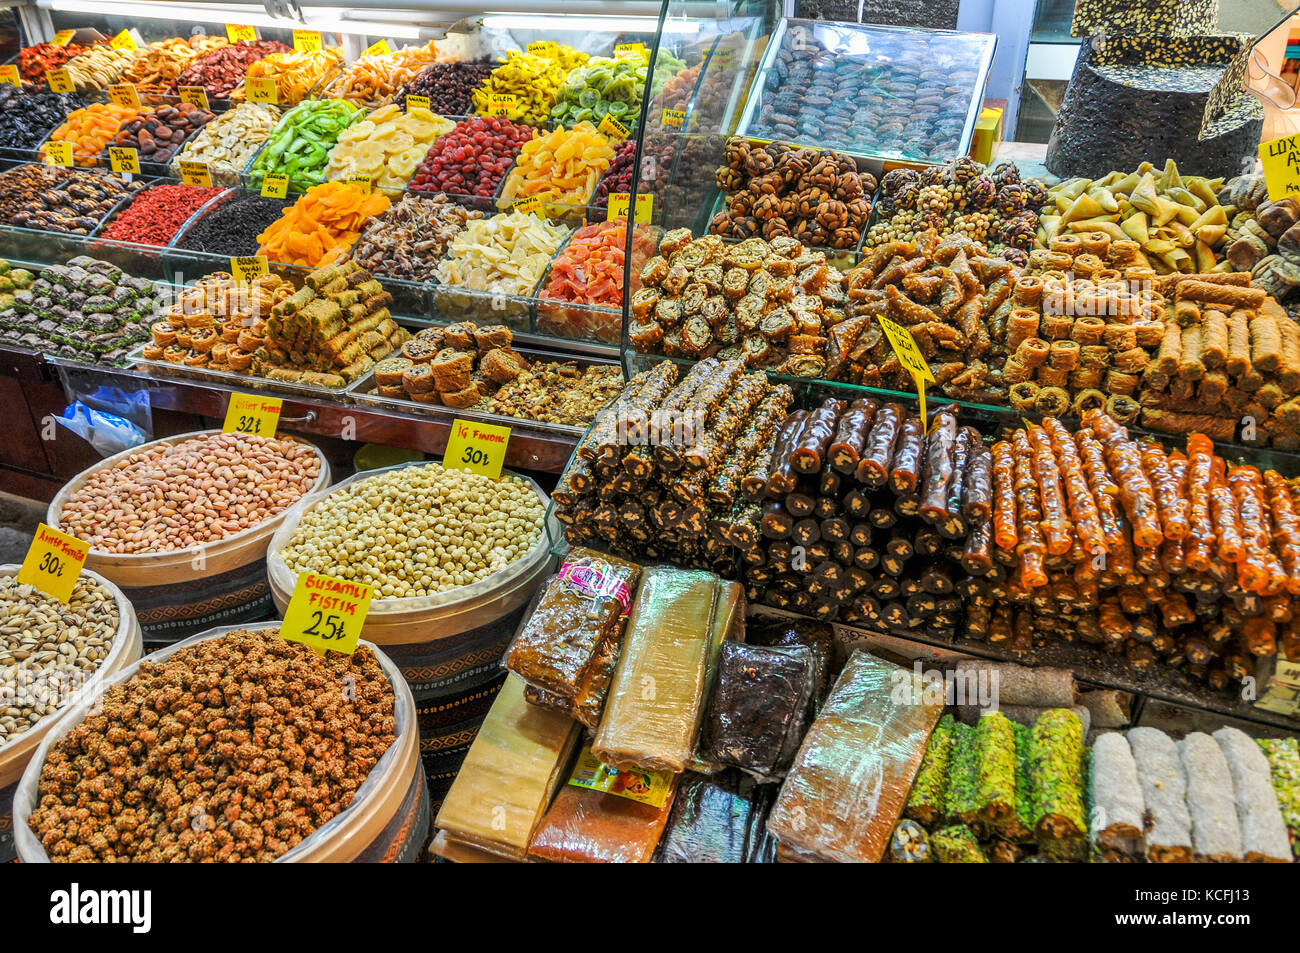 Mısır Çarşısı, Egyptian Bazaar, Istanbul, Turkey Stock Photo